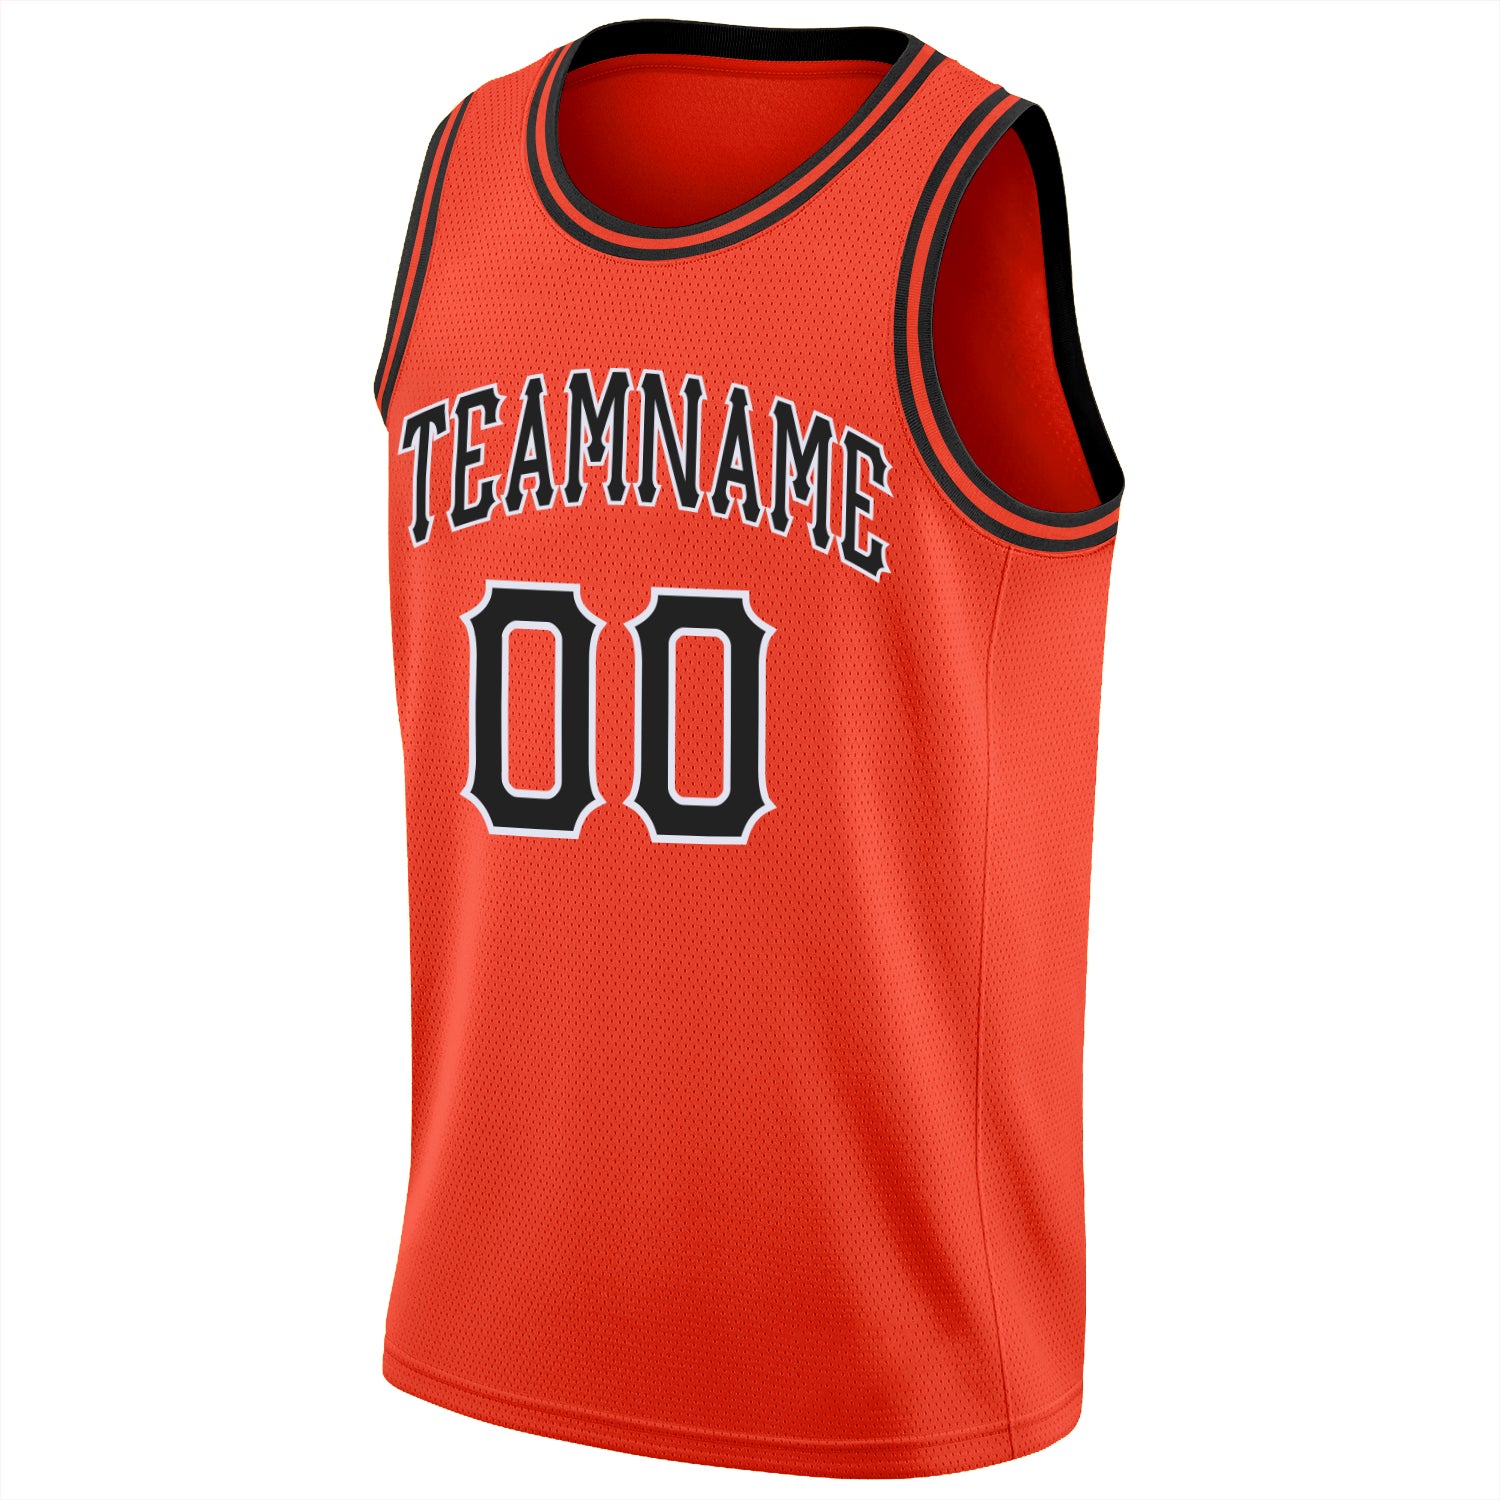 FANSIDEA Custom Basketball Jersey White Orange Round Neck Sublimation Basketball Suit Jersey Men's Size:3XL